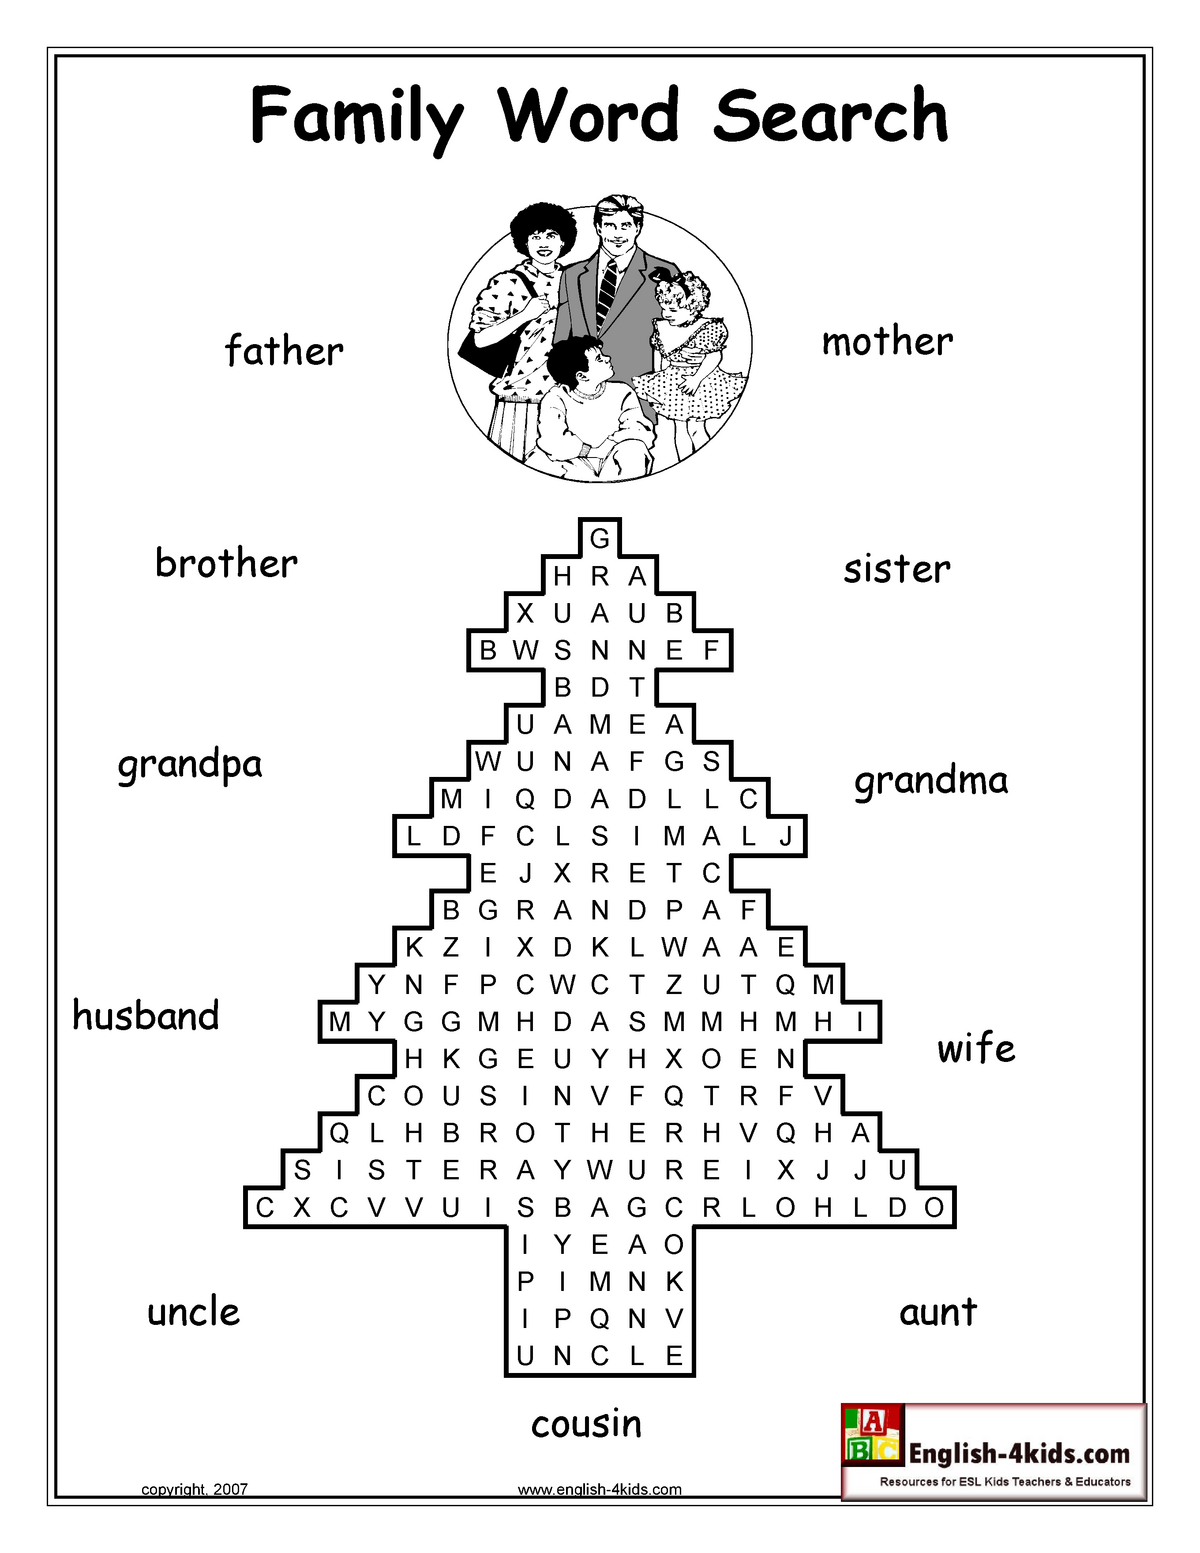 Family words vocabulary. Wordsearch семья. Family members Wordsearch. Кроссворд на английском на тему семья. Задания по семье по английскому.